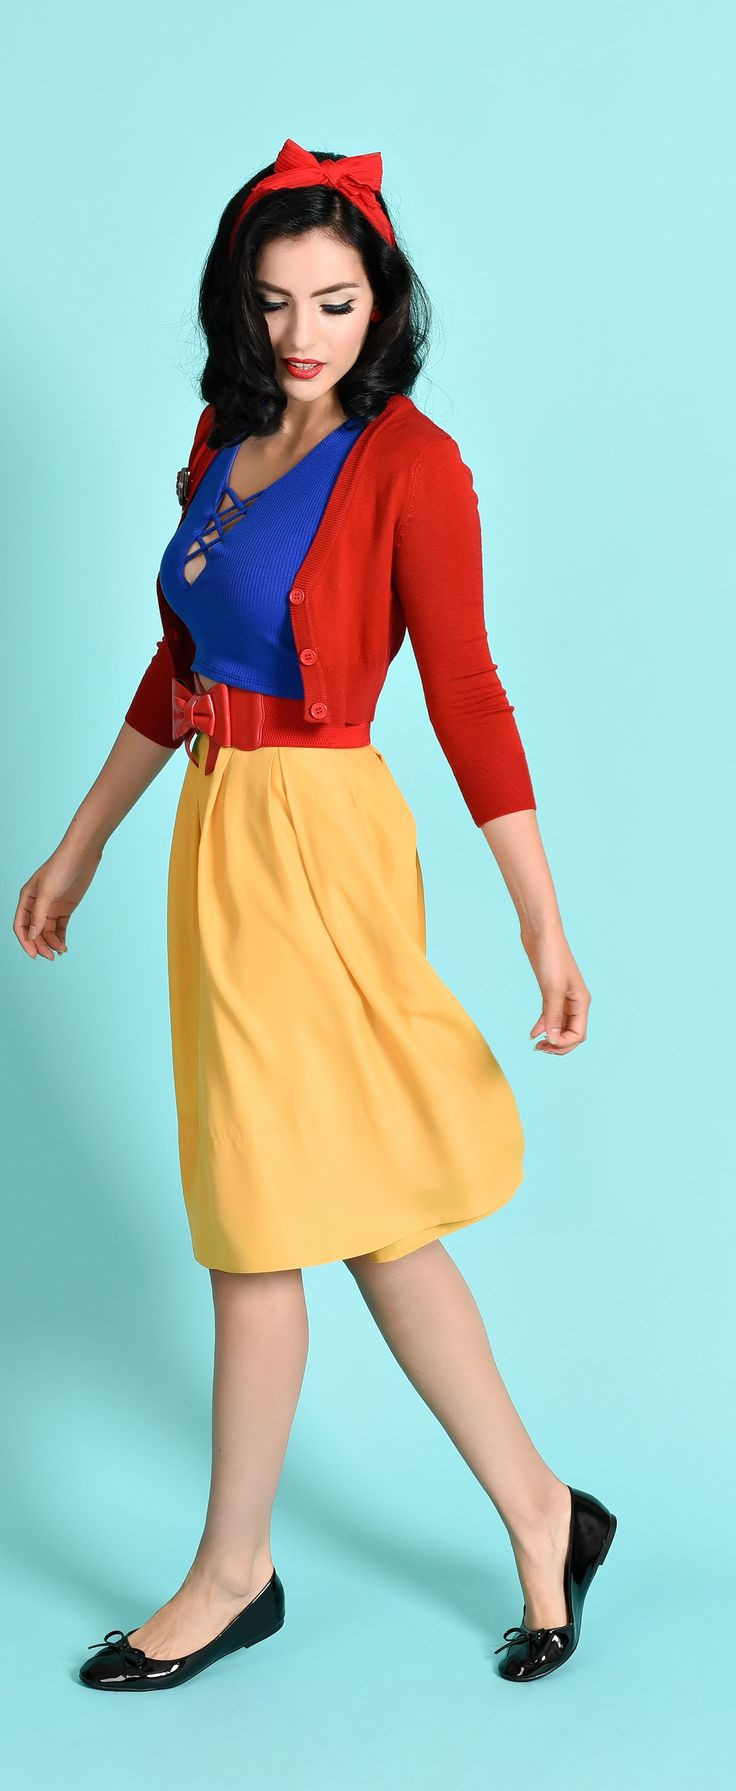 DIY Snow White Costume
 Best 25 Snow white costume ideas on Pinterest